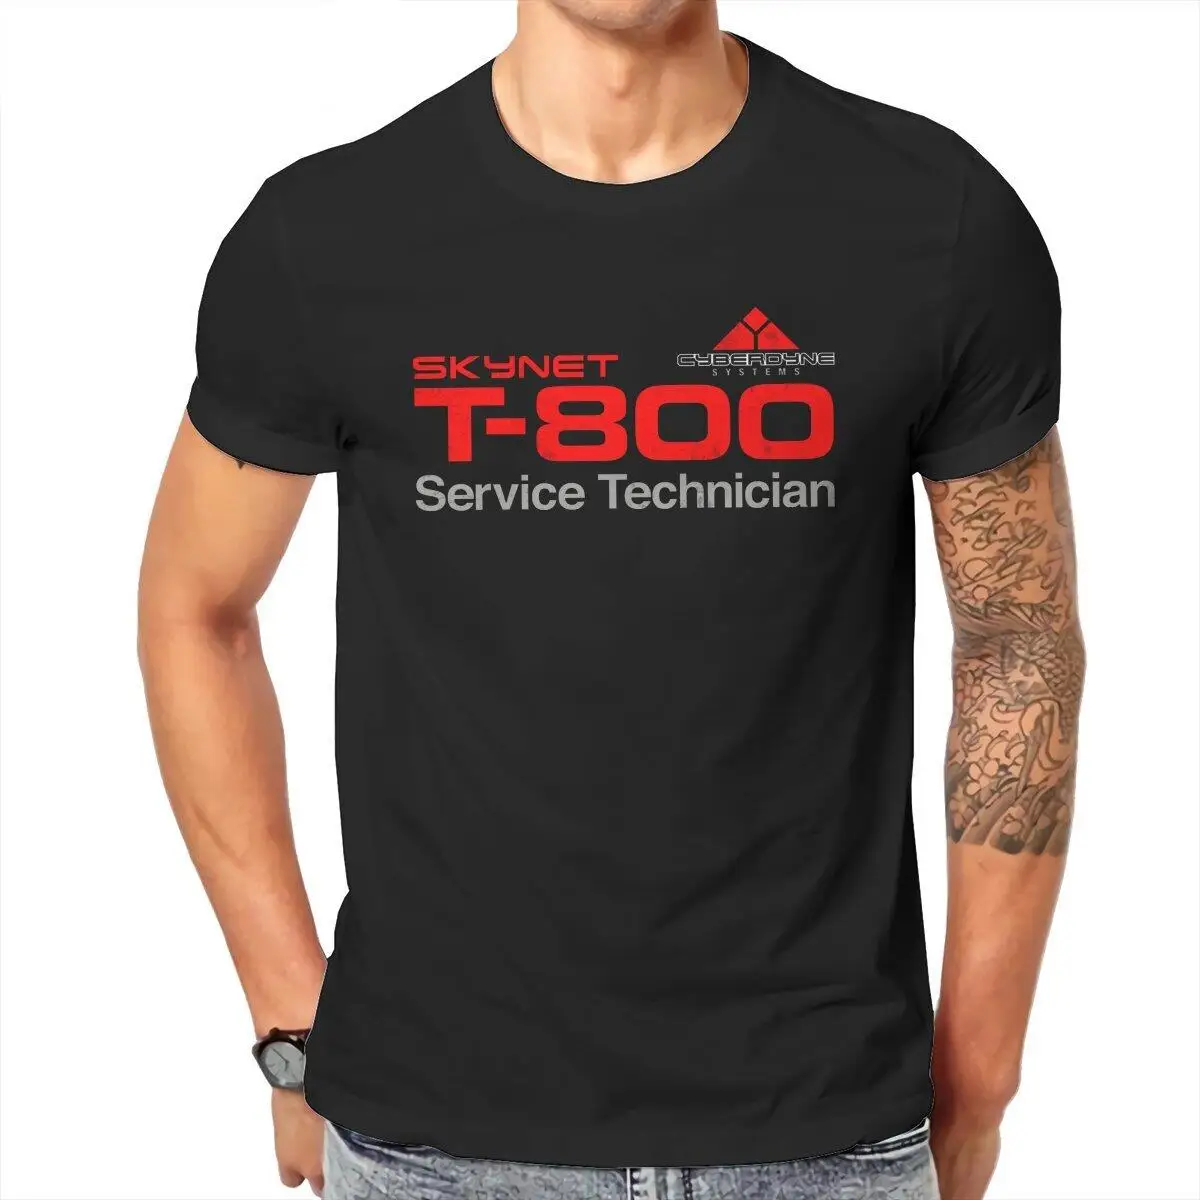 Men's T-Shirt T-800 Technician  Amazing Tee Shirt Short Sleeve Terminator Cyberdyne Cyborg T Shirts Crew Neck Clothes Party